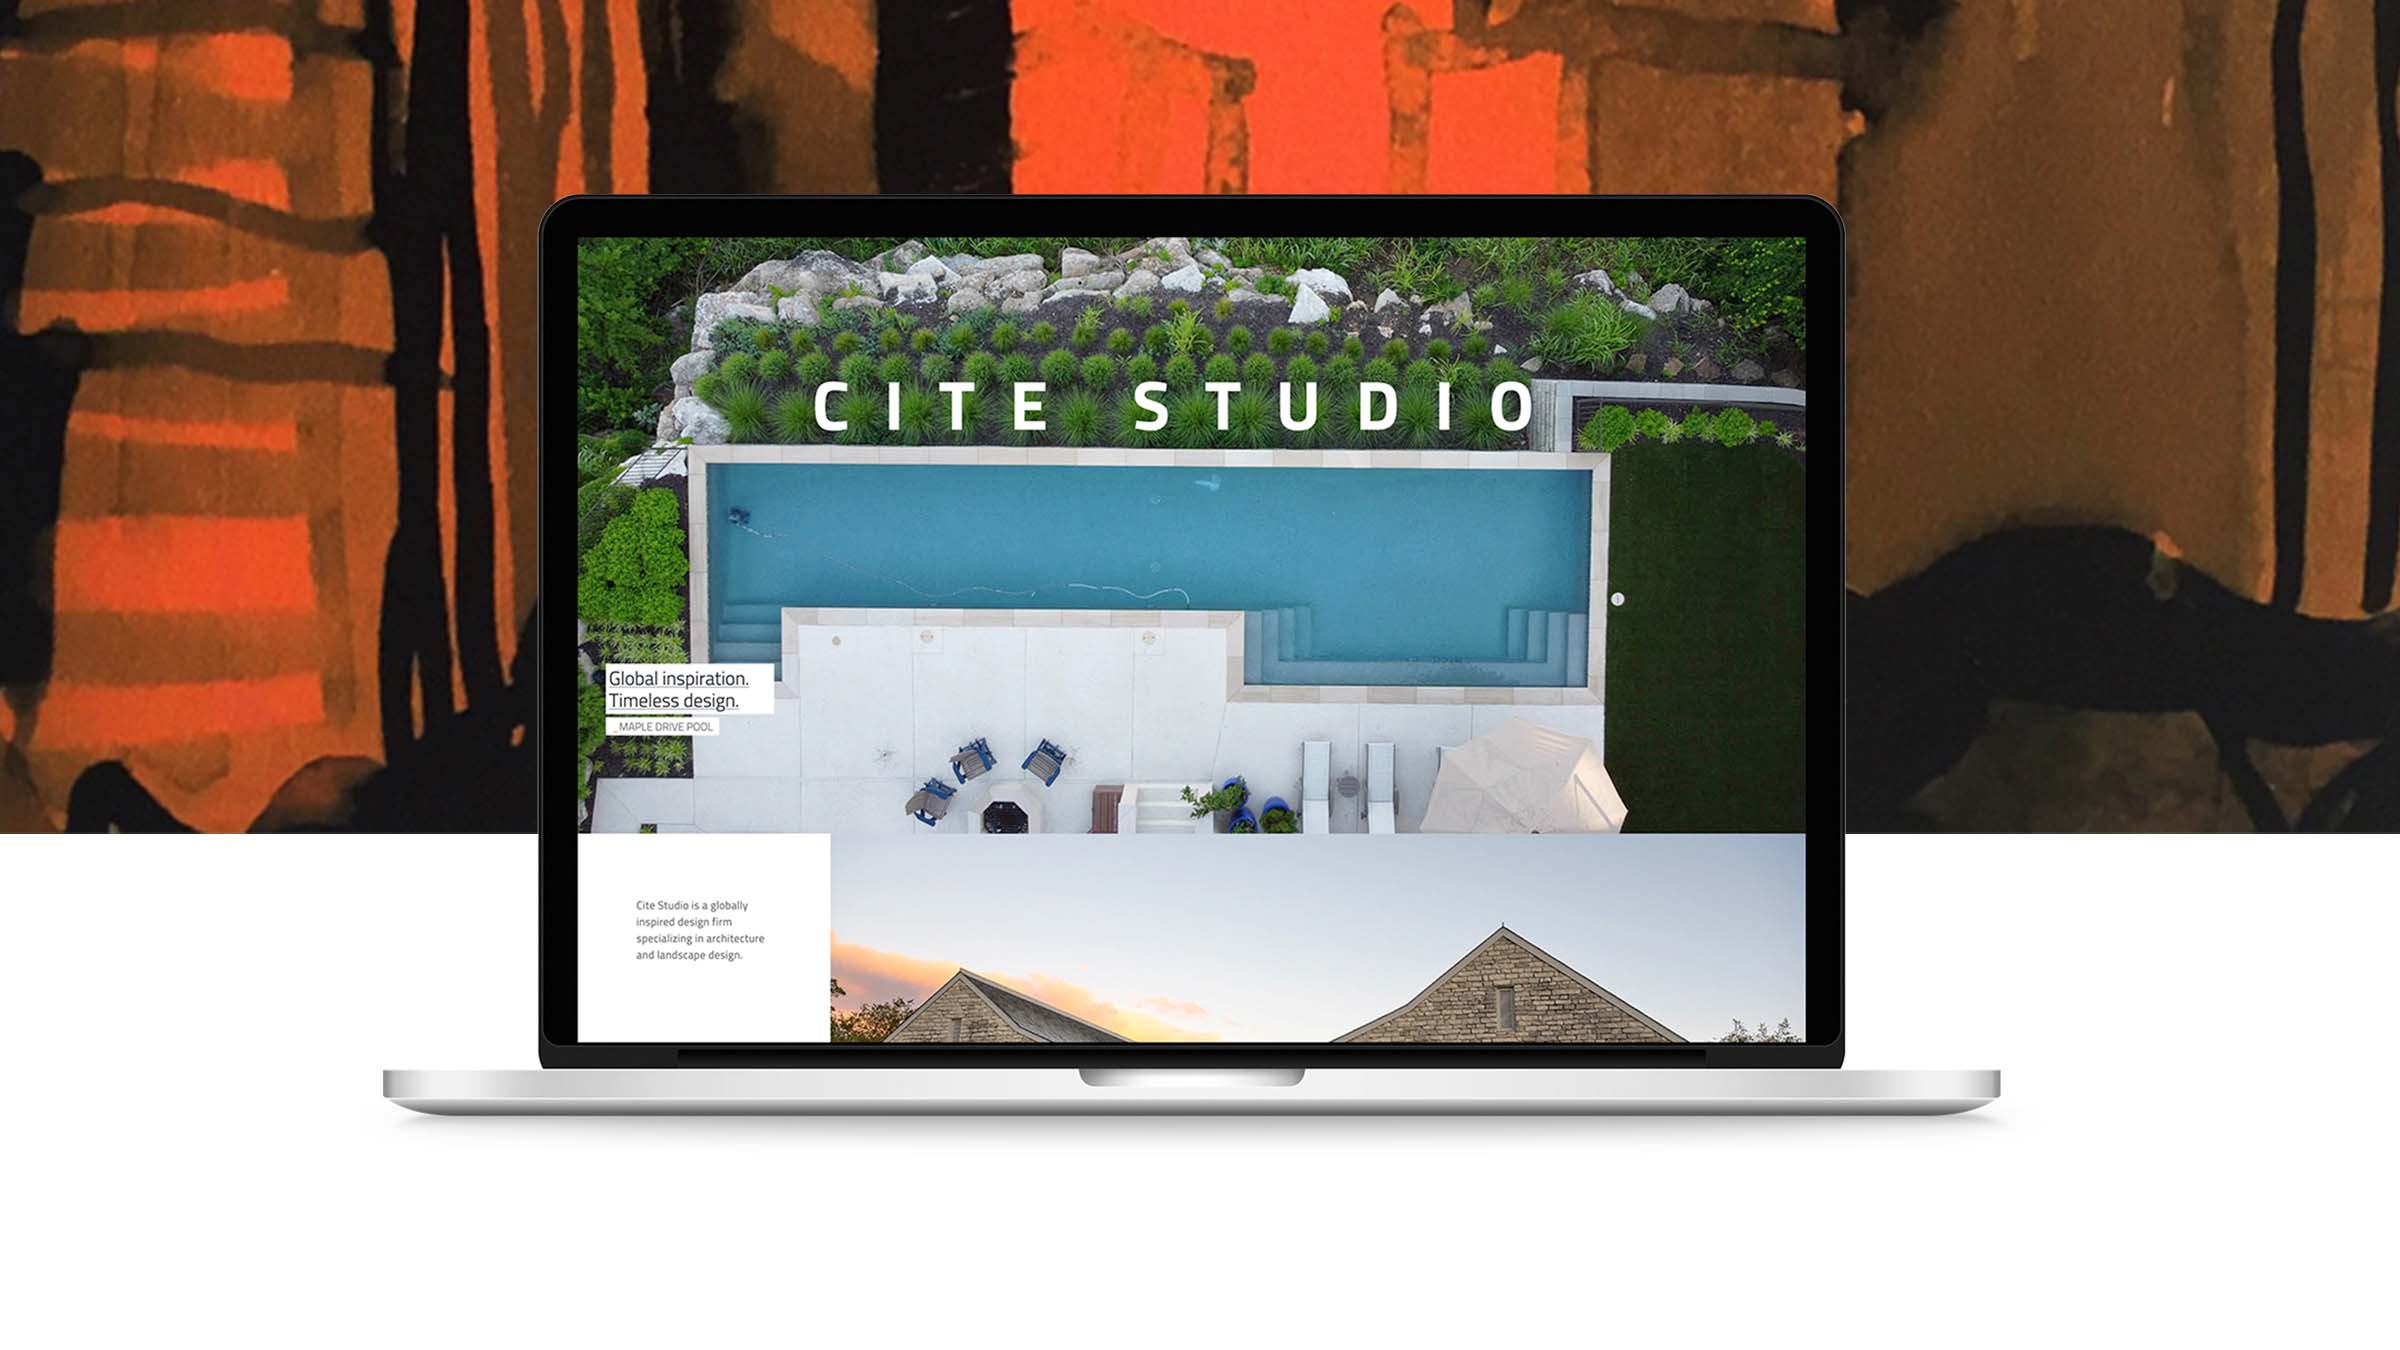 The Cite Studio architecture studio website on a laptop